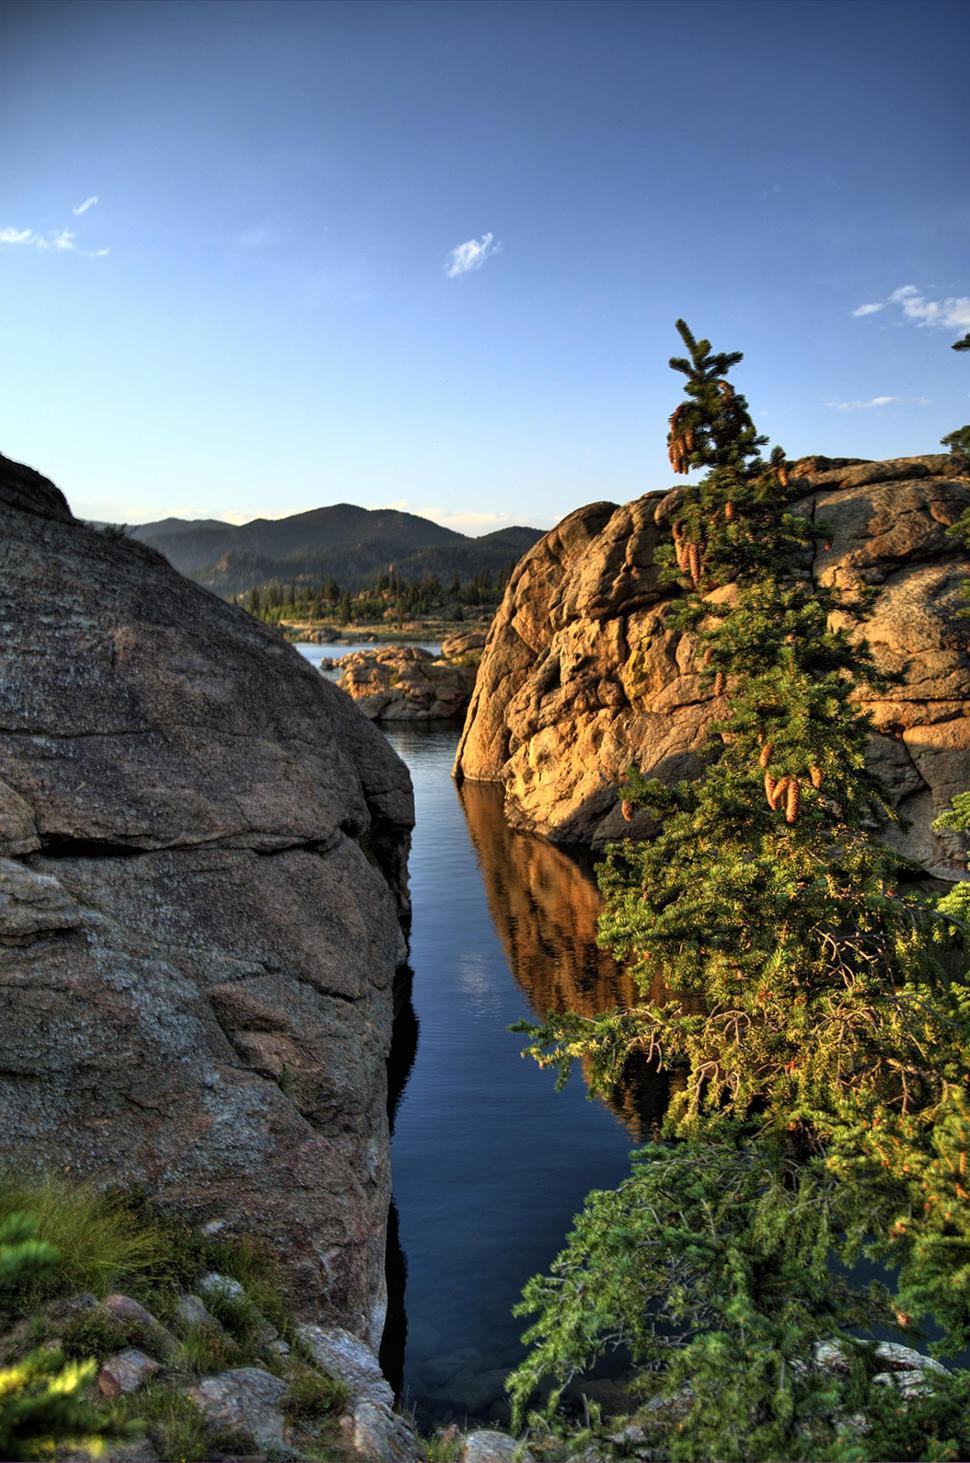 Free Image of Lake with rock mountains 